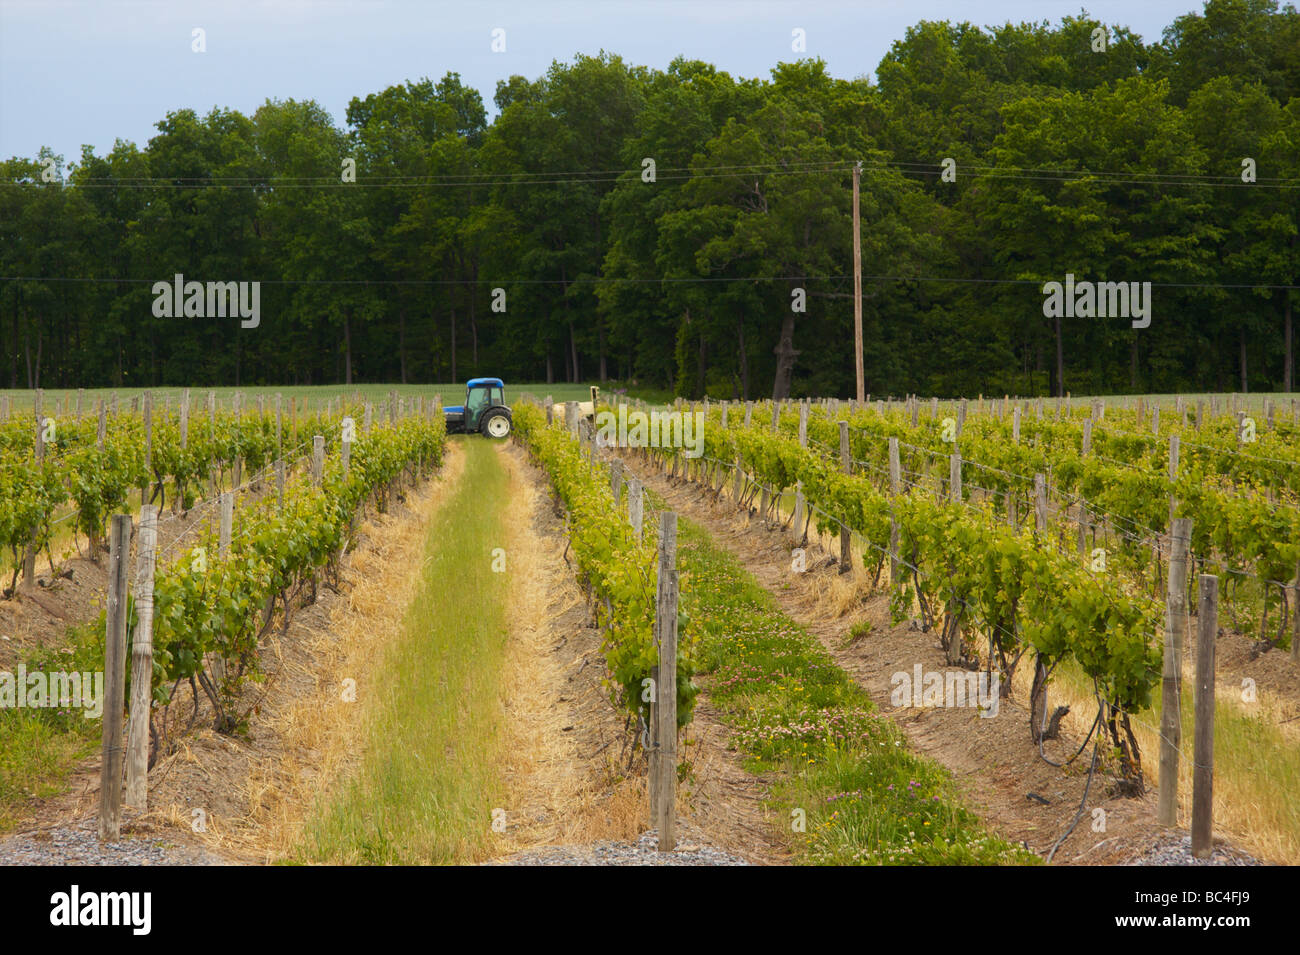 Tractor tending a vineyard Stock Photo